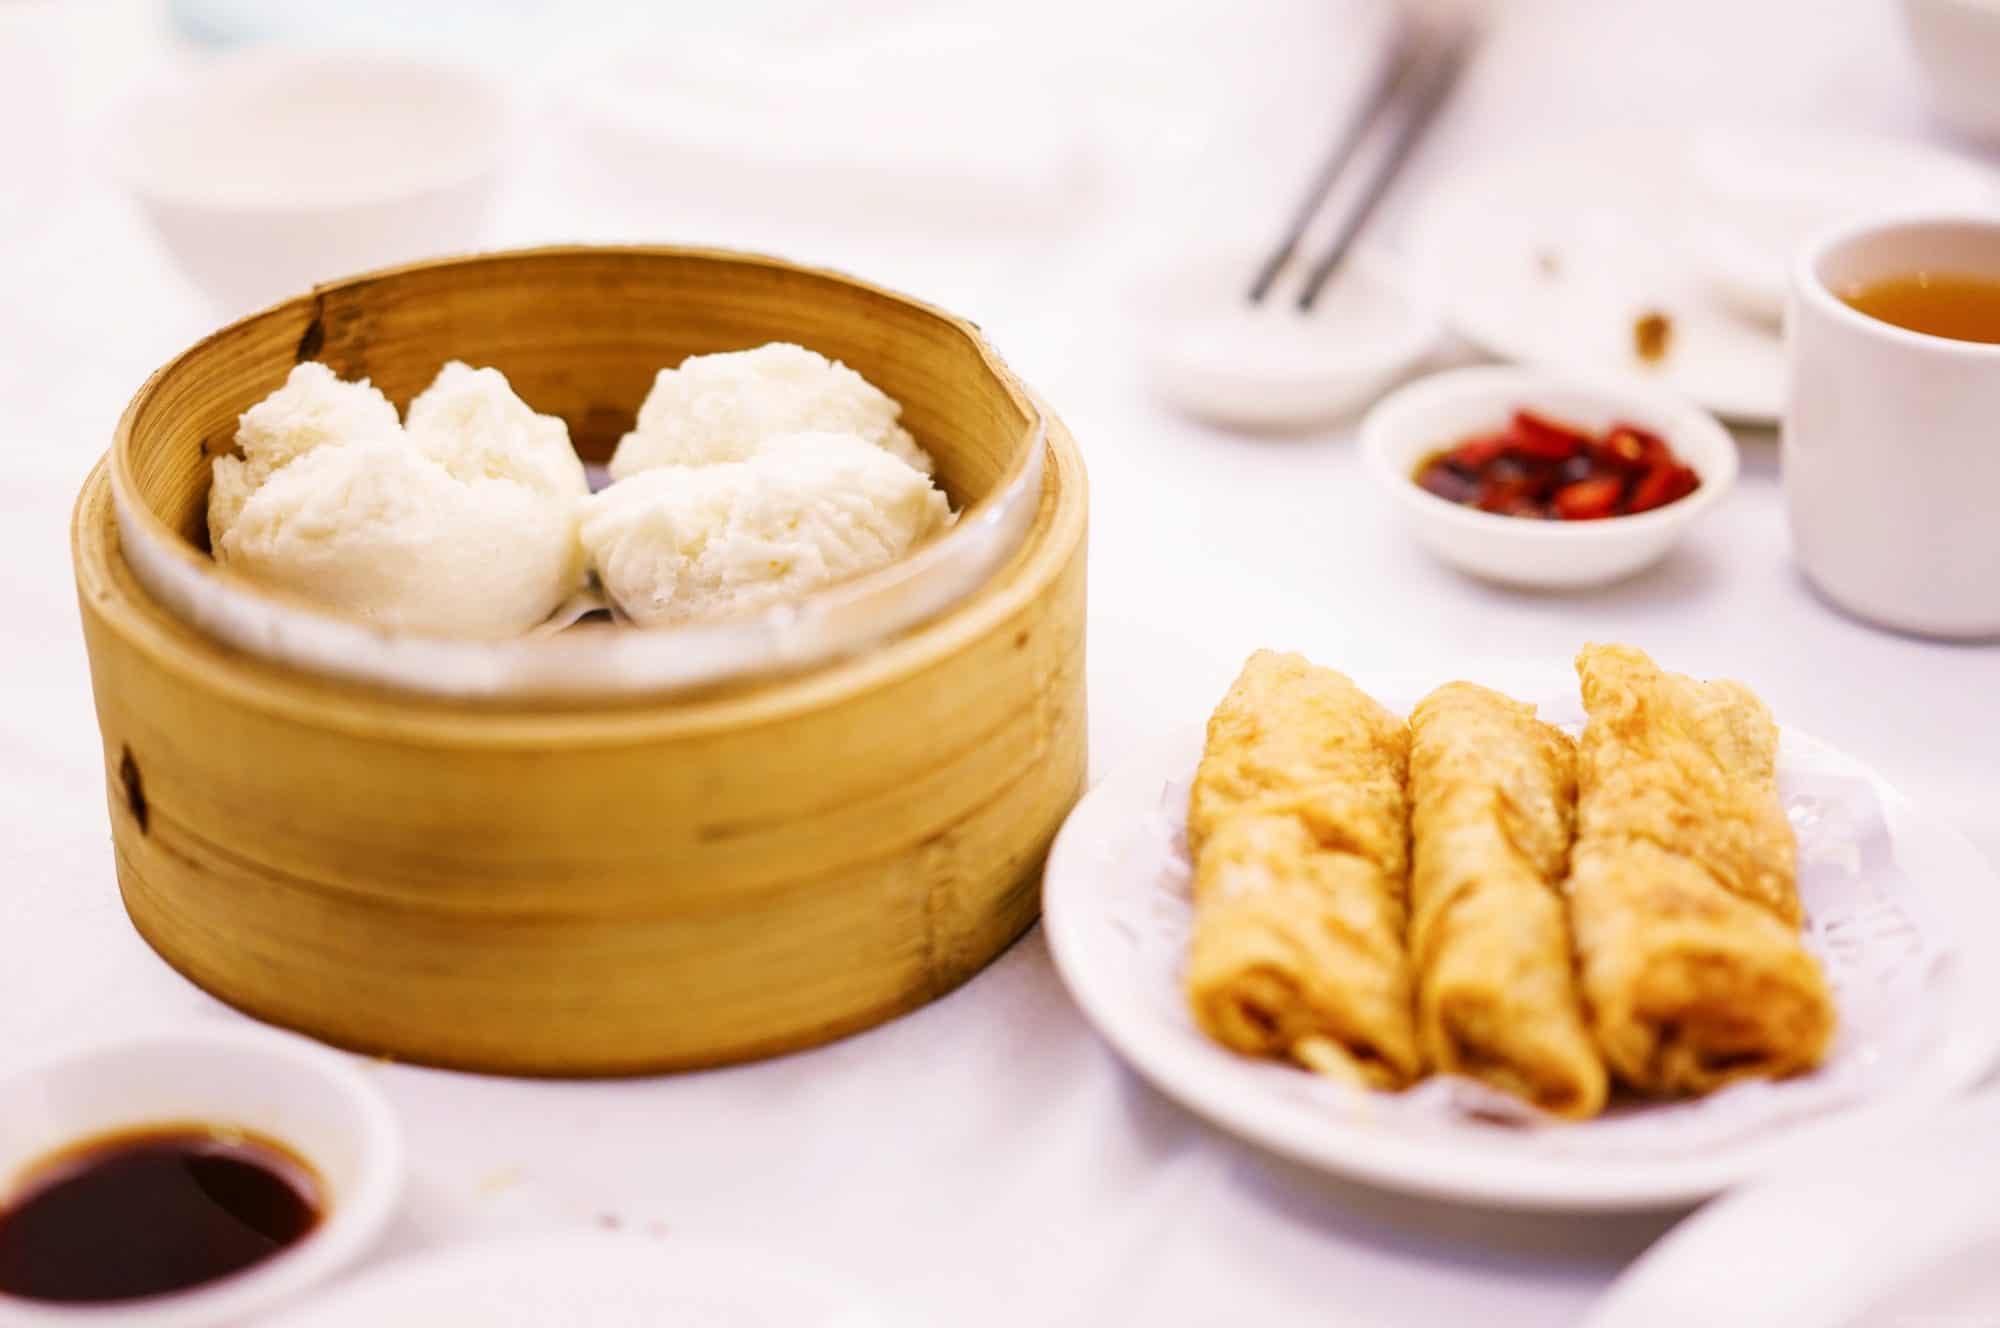 Wen Zhou is the best restaurant in Belleville for steamed pork buns and dumplings.